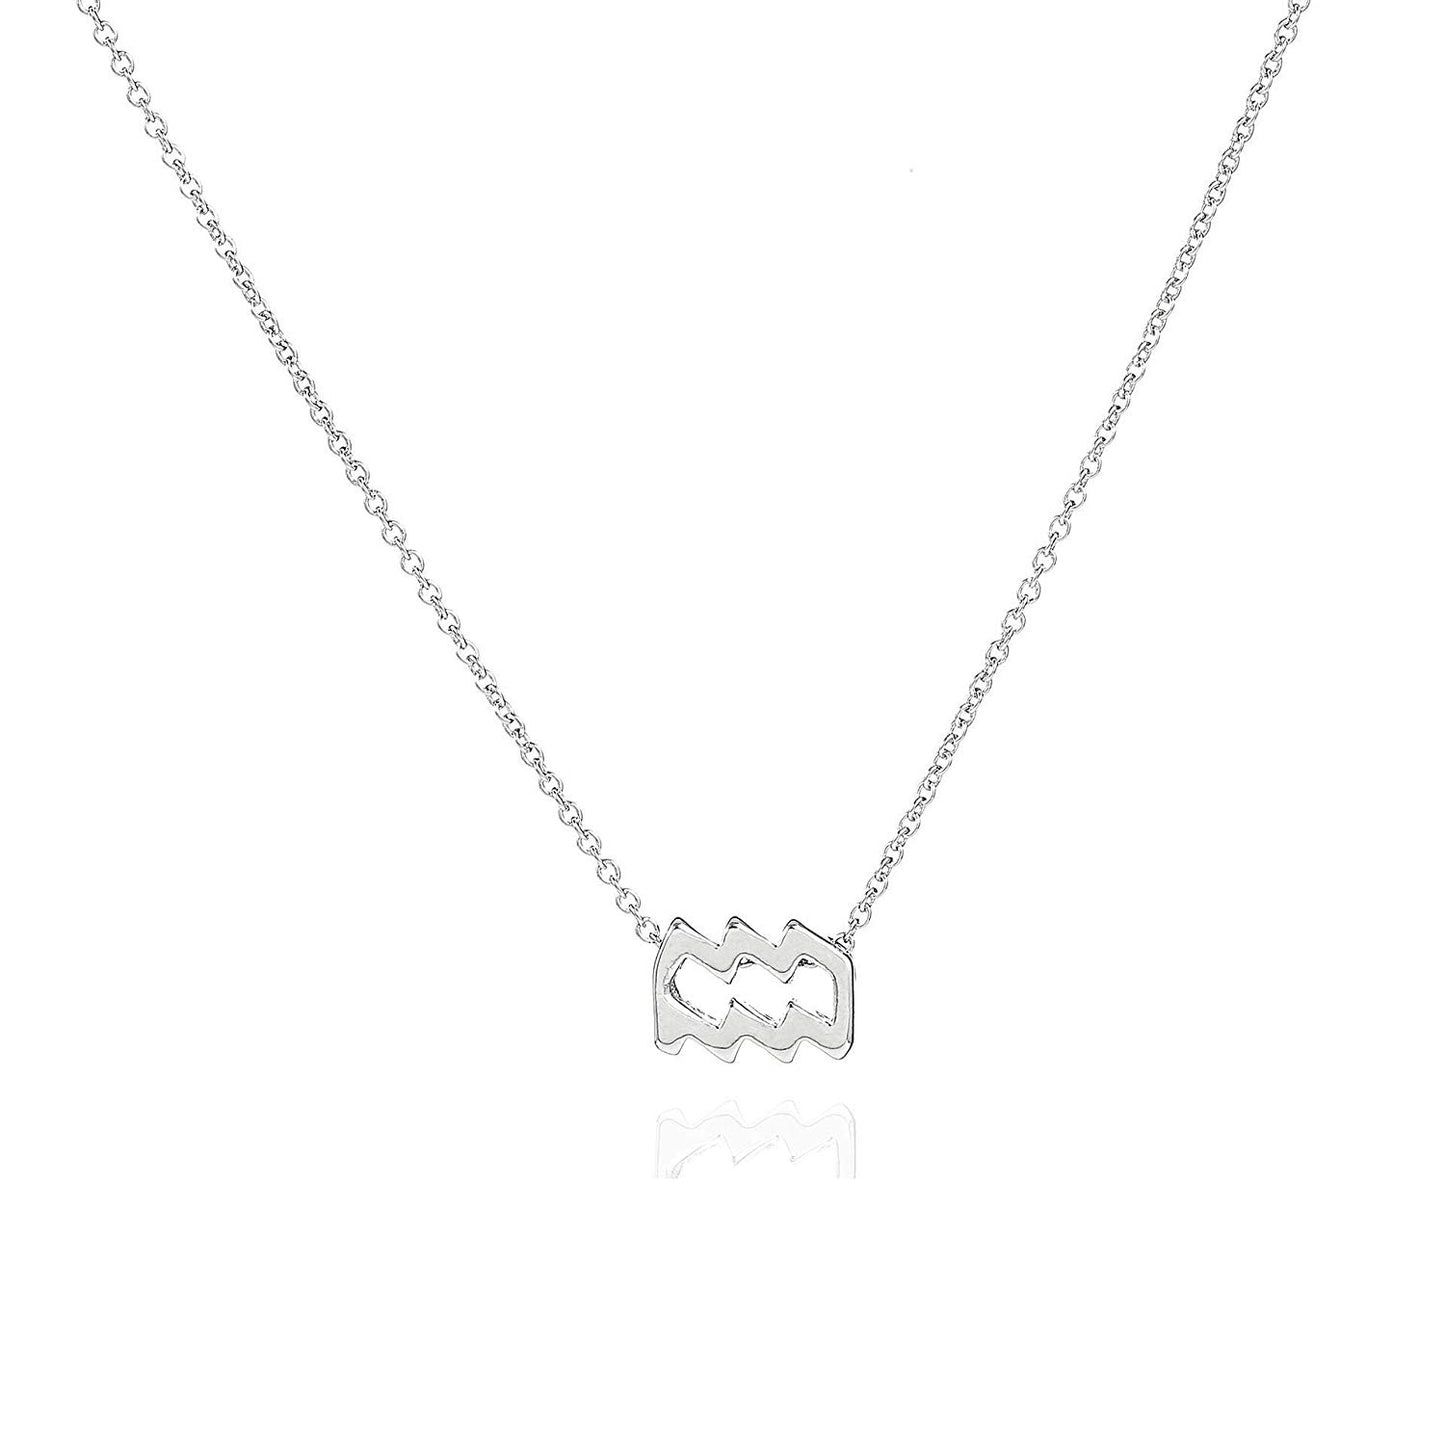 Aquarius ( Jan 20 - Feb 18 ) Silver - Kuberlo - Best Gift for - Imitation Jewellery - Designer Jewellery - one gram gold - fashion jewellery